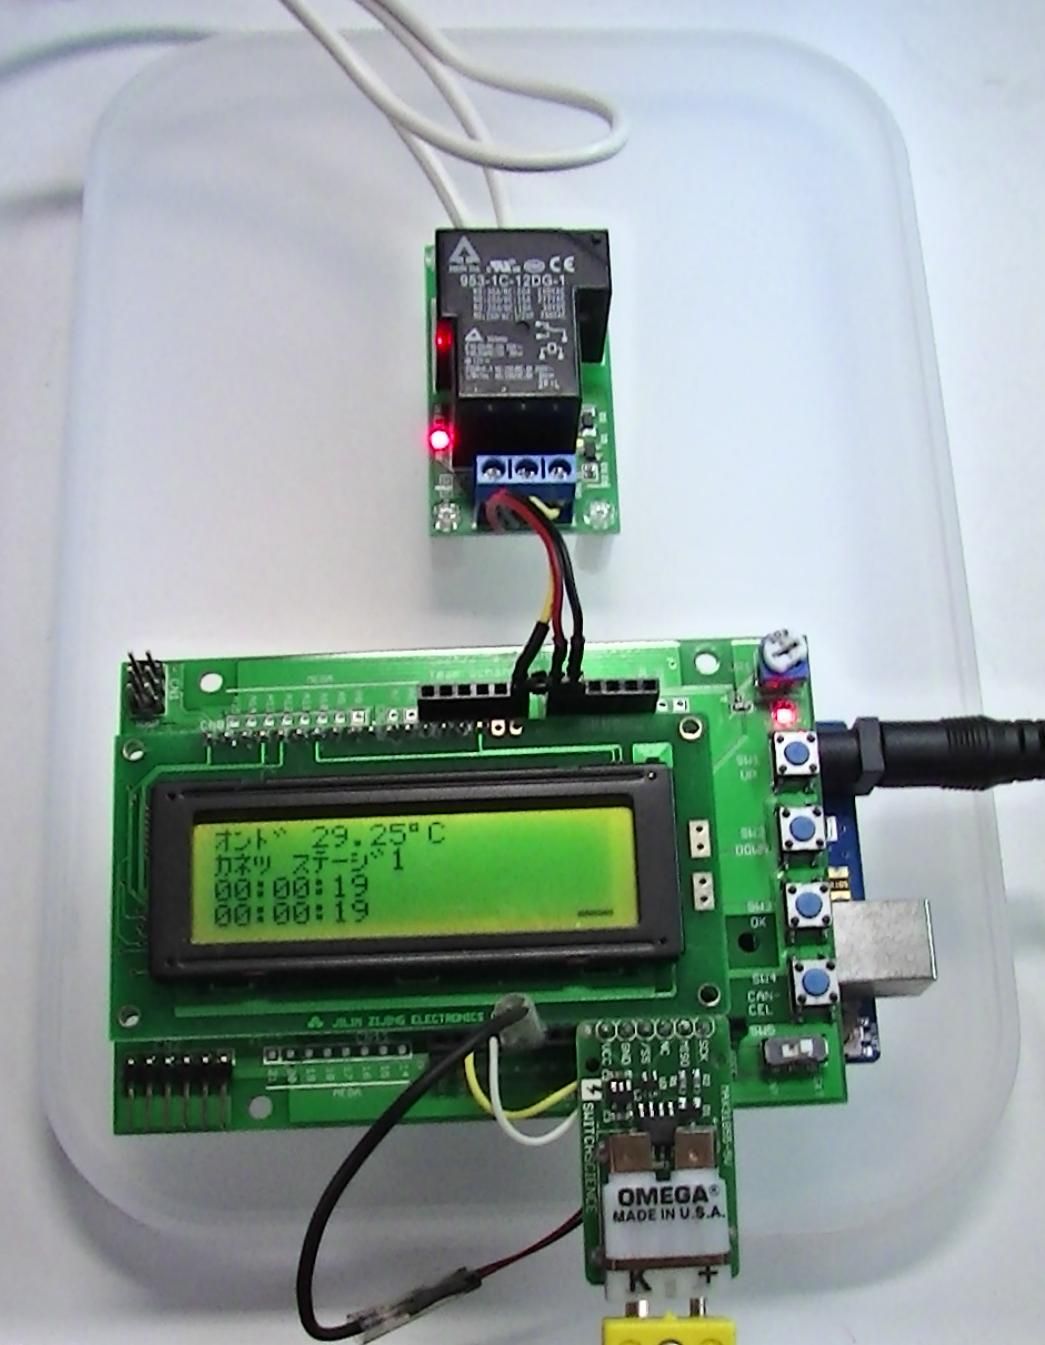 Arduinoとホットプレートを使ったリフロー装置(1号機)の製作(1) - しなぷすのハード製作記